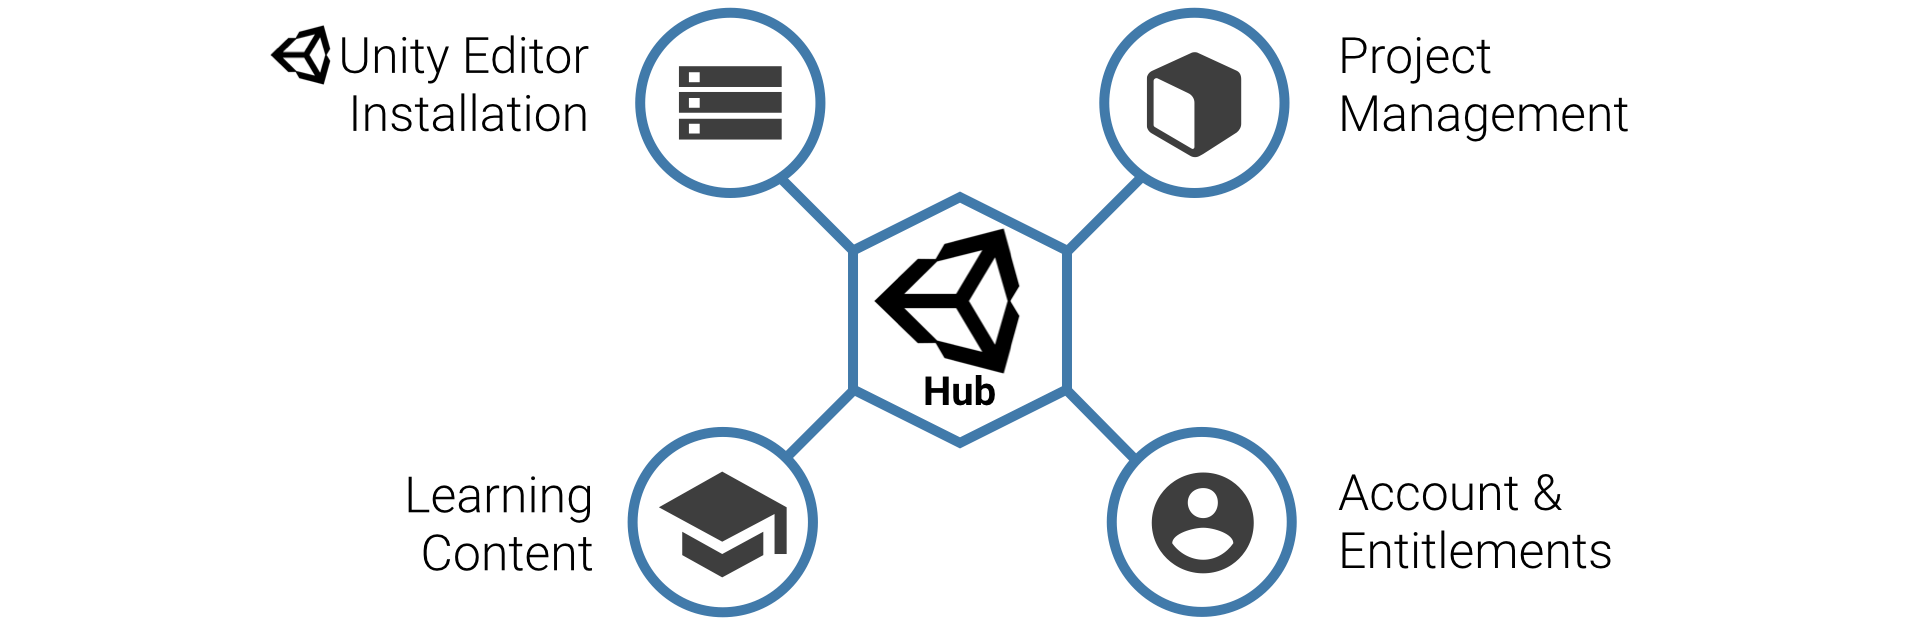 unity hub 32 bit download